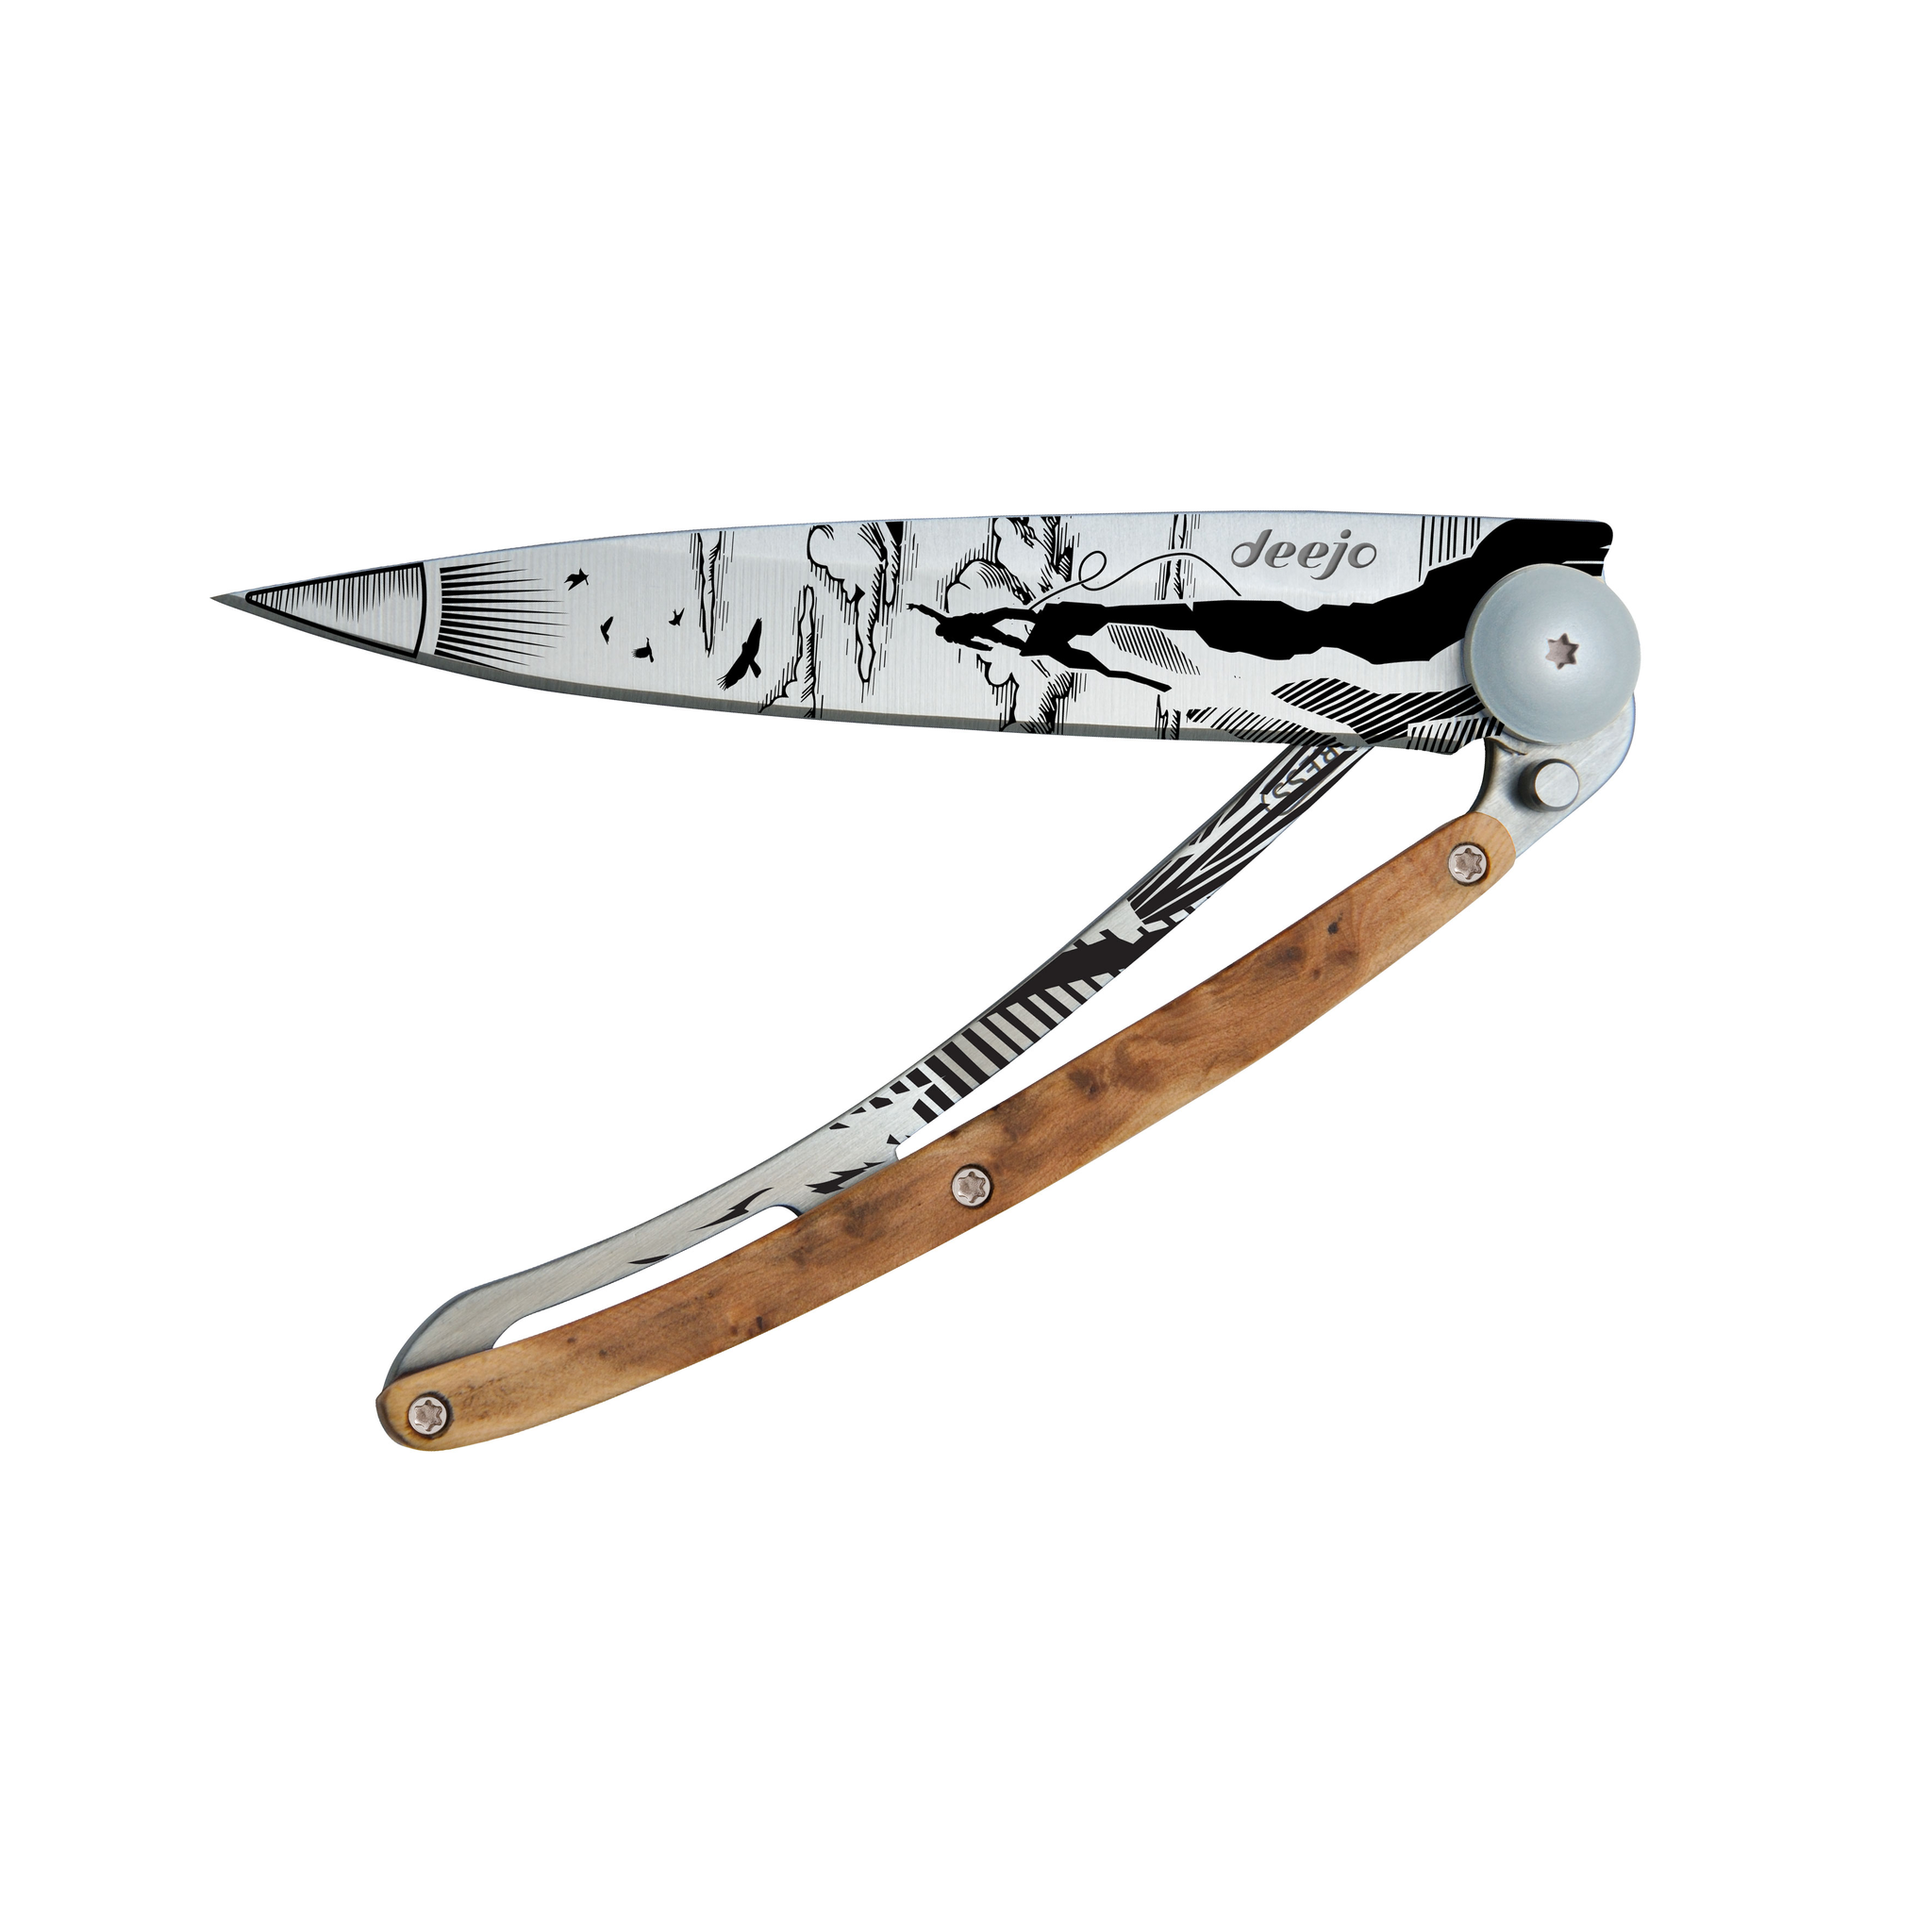  нож DEEJO TATTOO BLACK 37G, Climb, 1CB031 по цене 3530.0 руб .